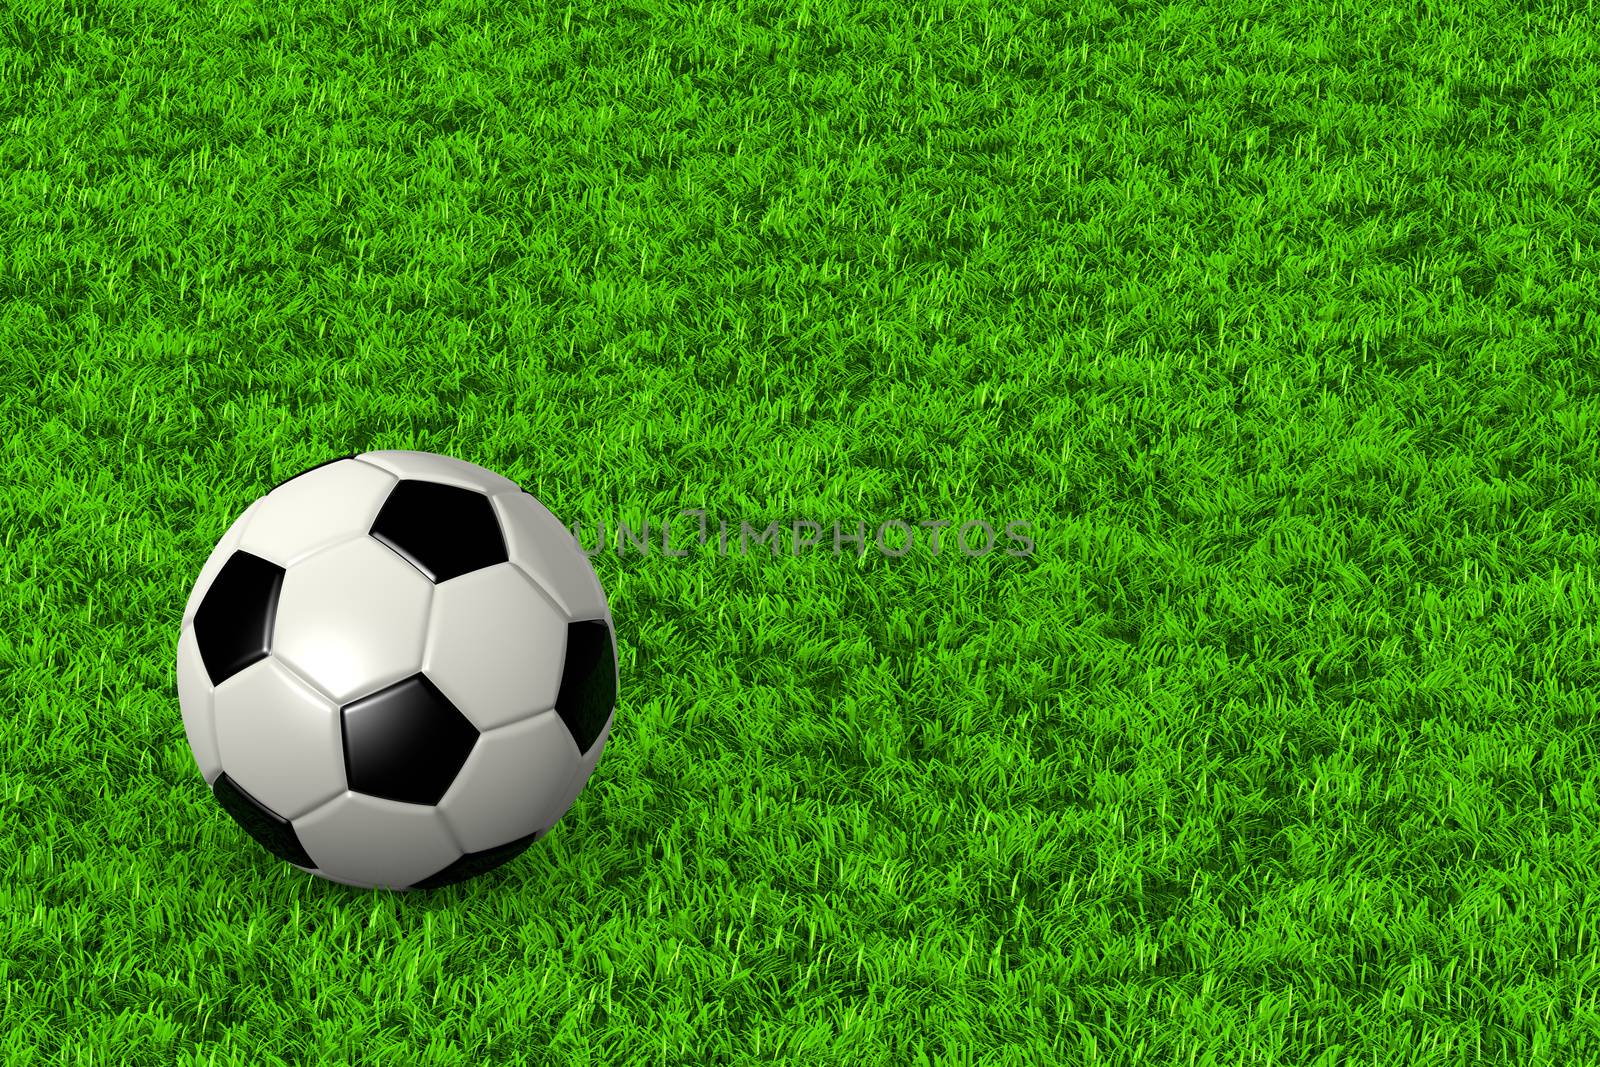 Soccer Ball on Grass Field Background 3D Illustration